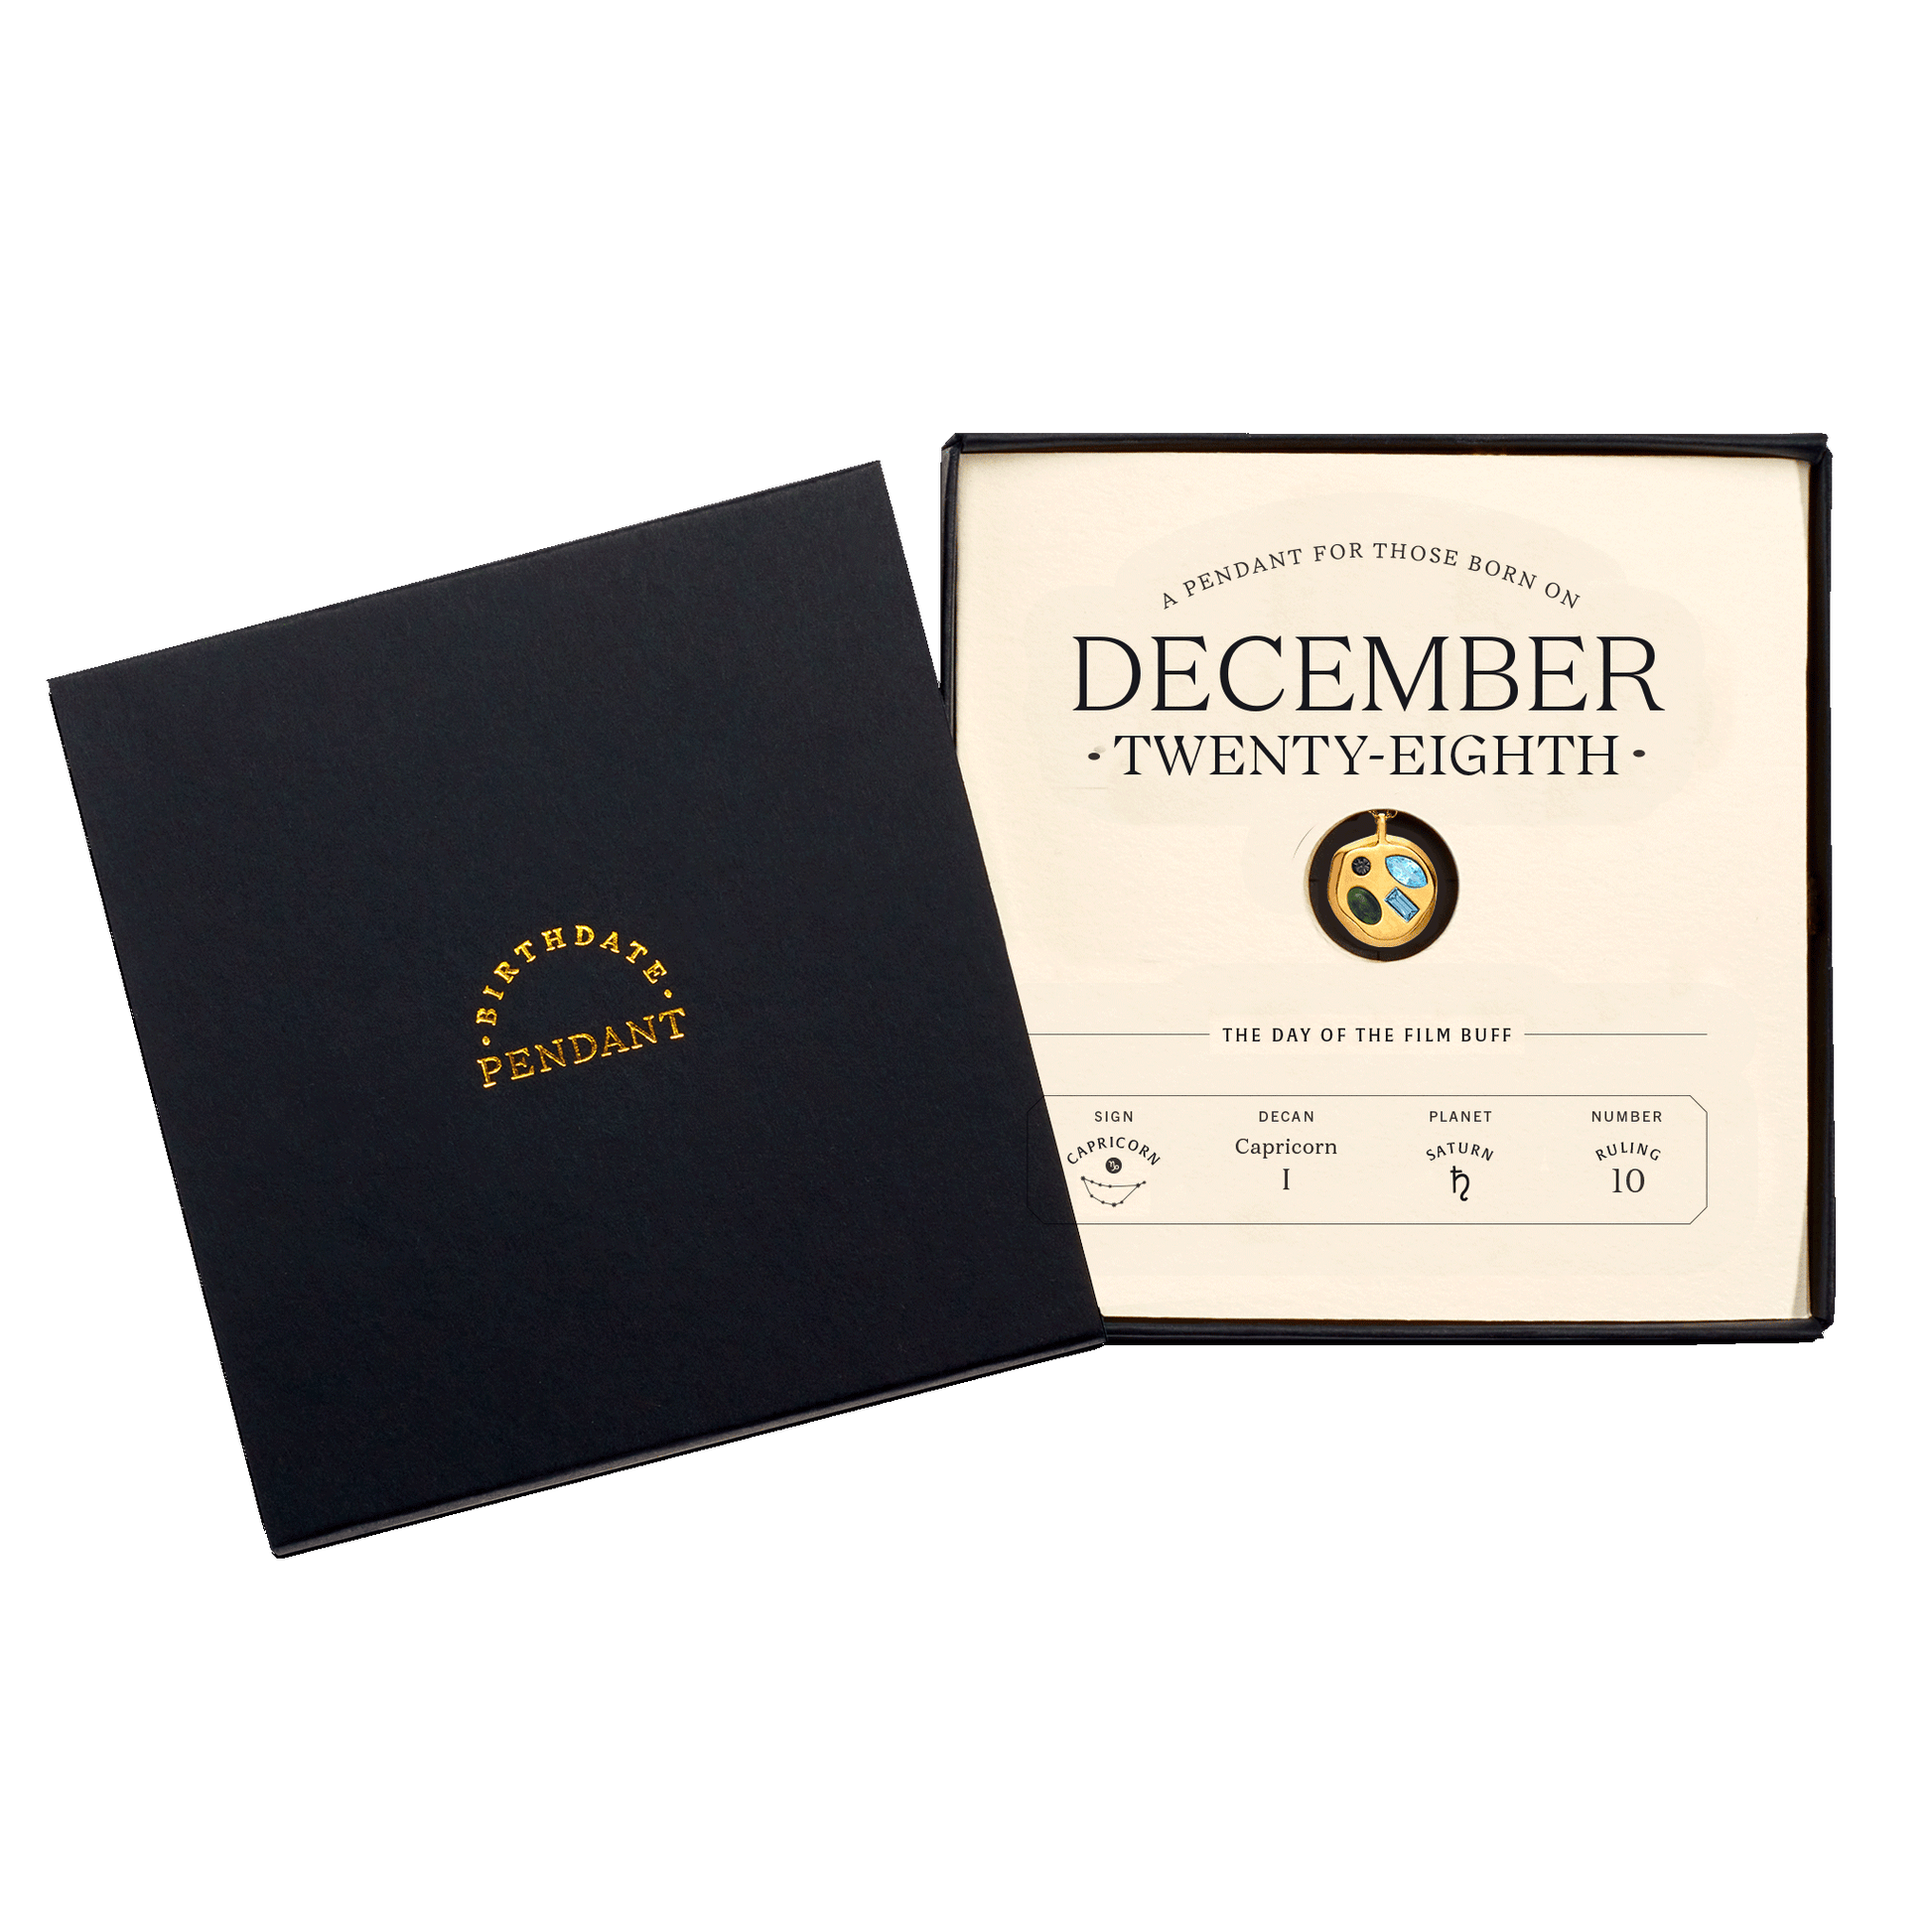 The December Twenty-Eighth Pendant inside its box